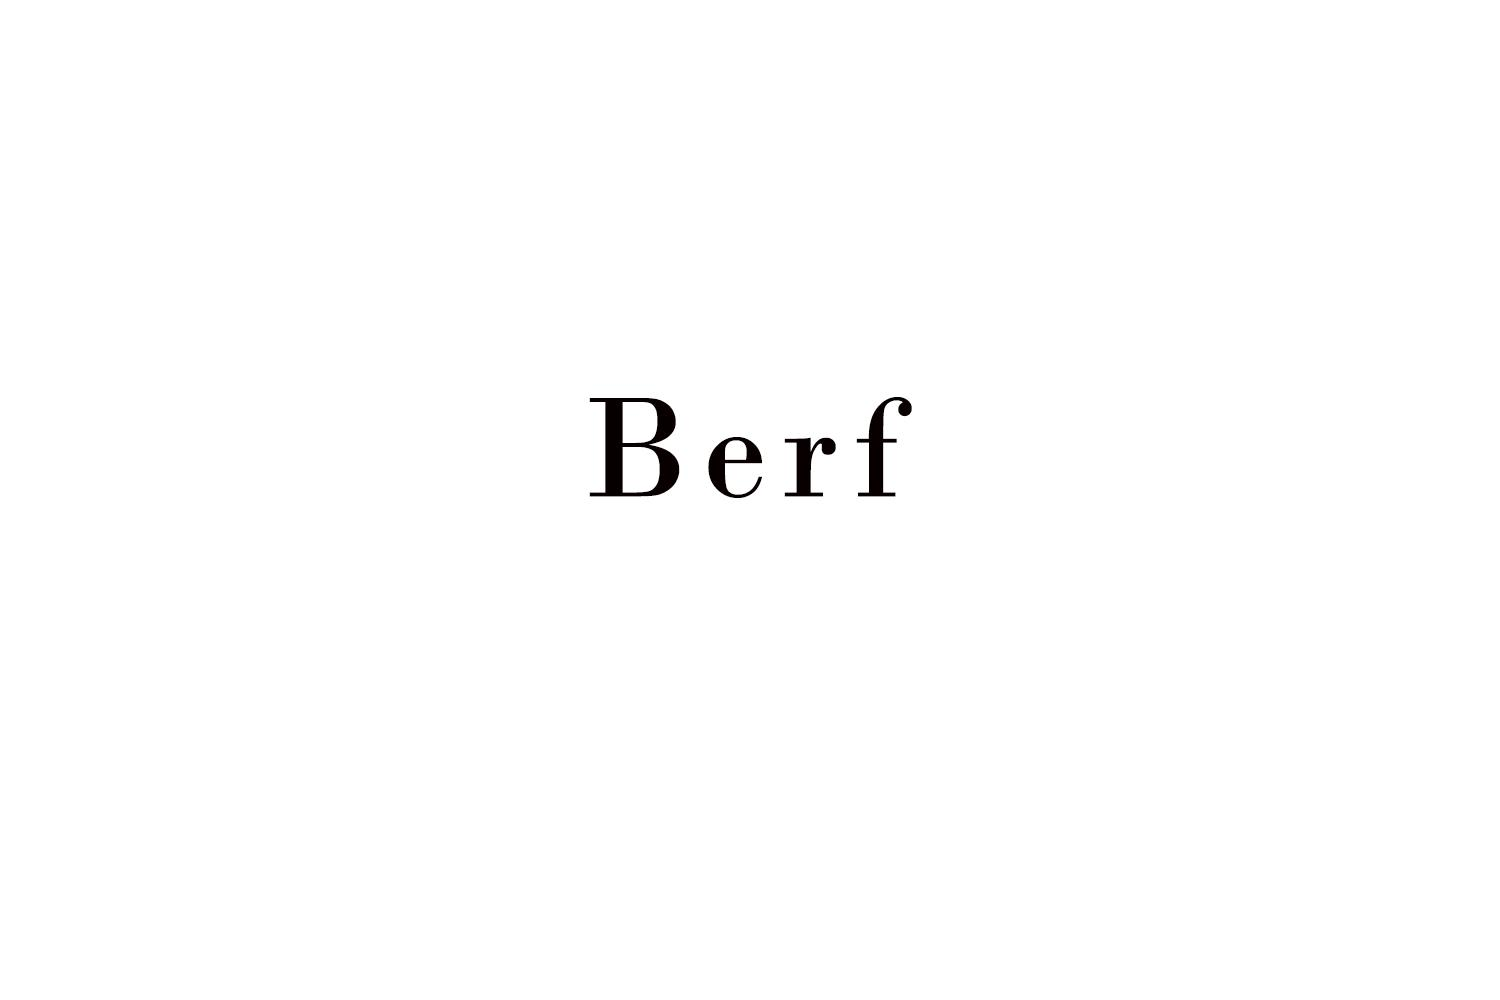 Berf